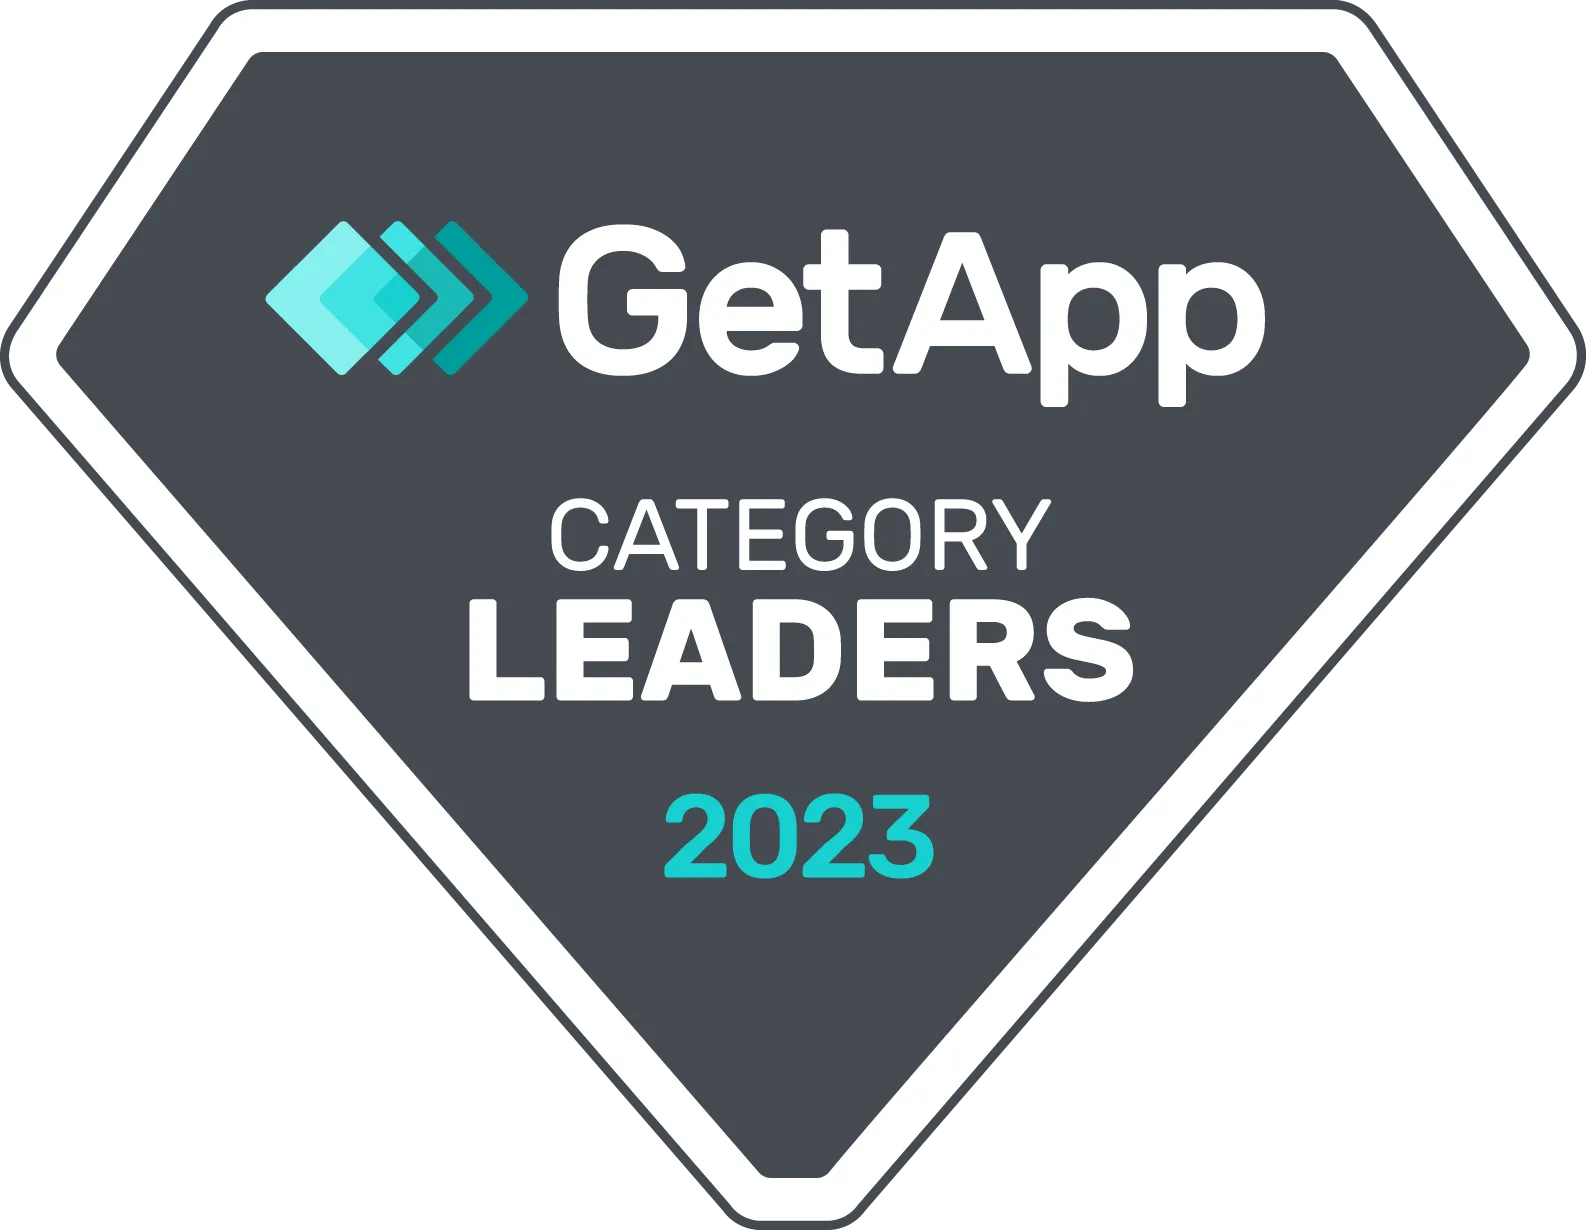 GetApp: Category Leaders 2023 for Digital Signatures Category